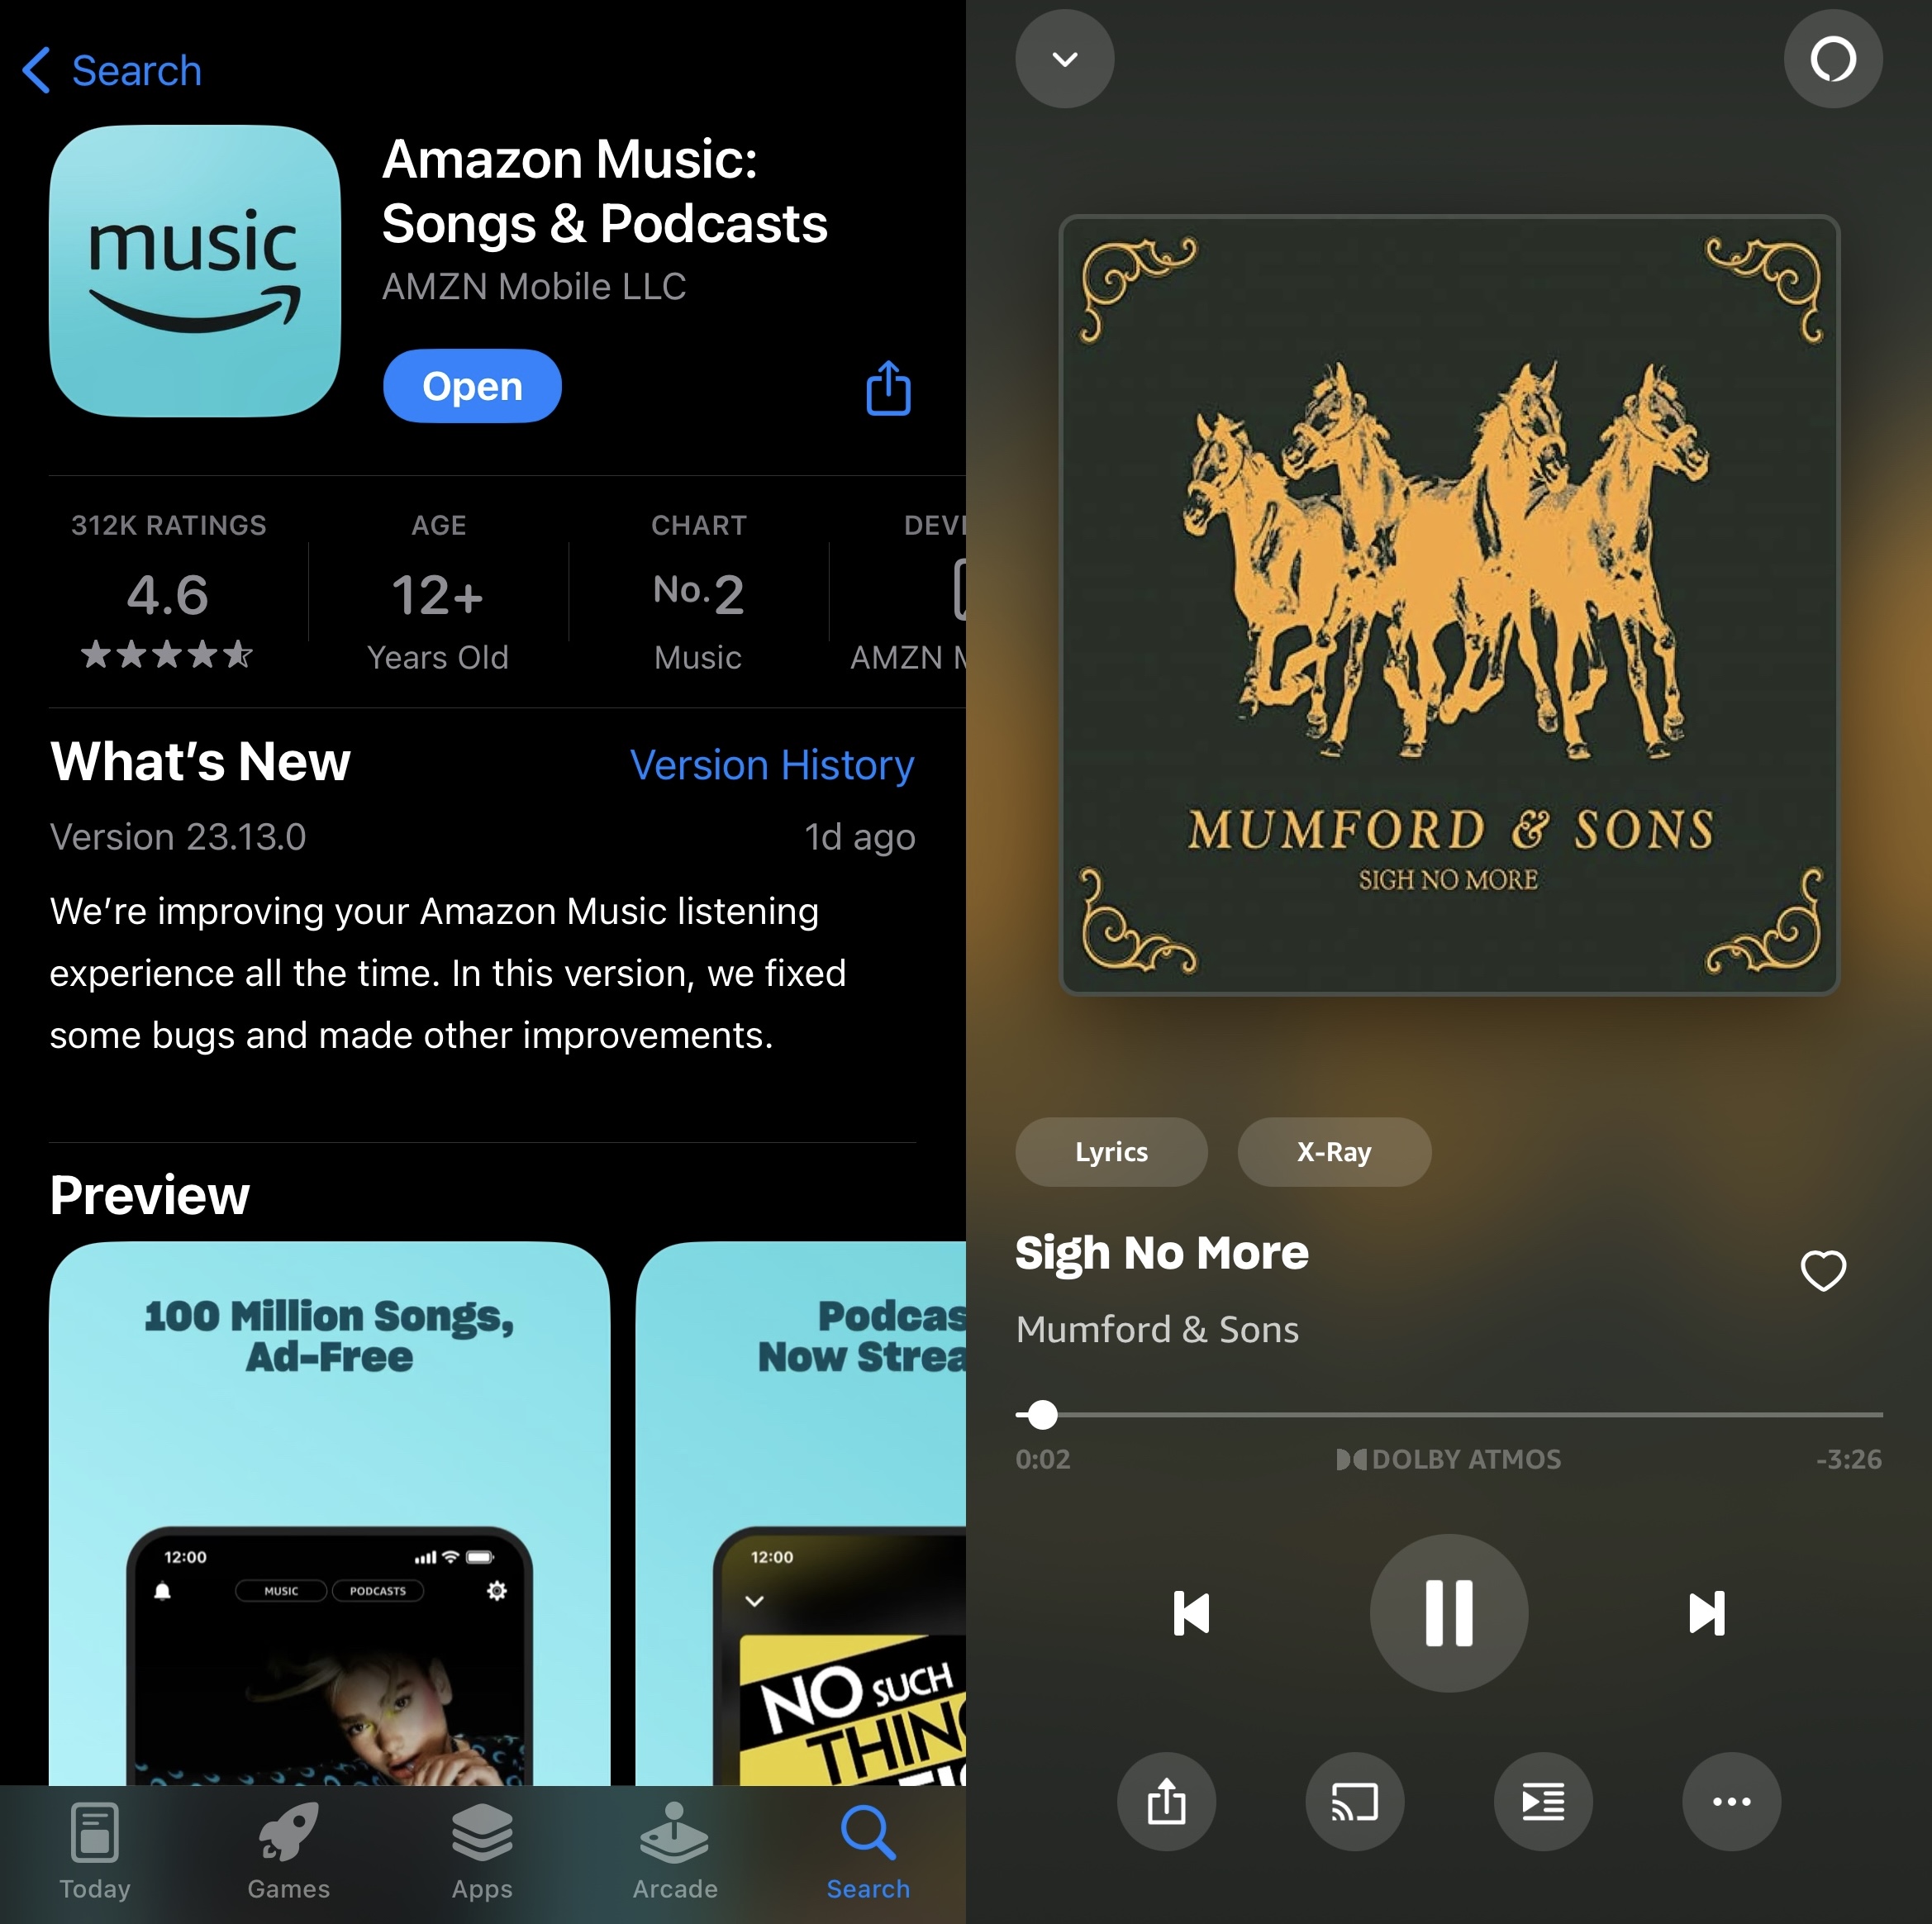 The Amazon Music app on iOS